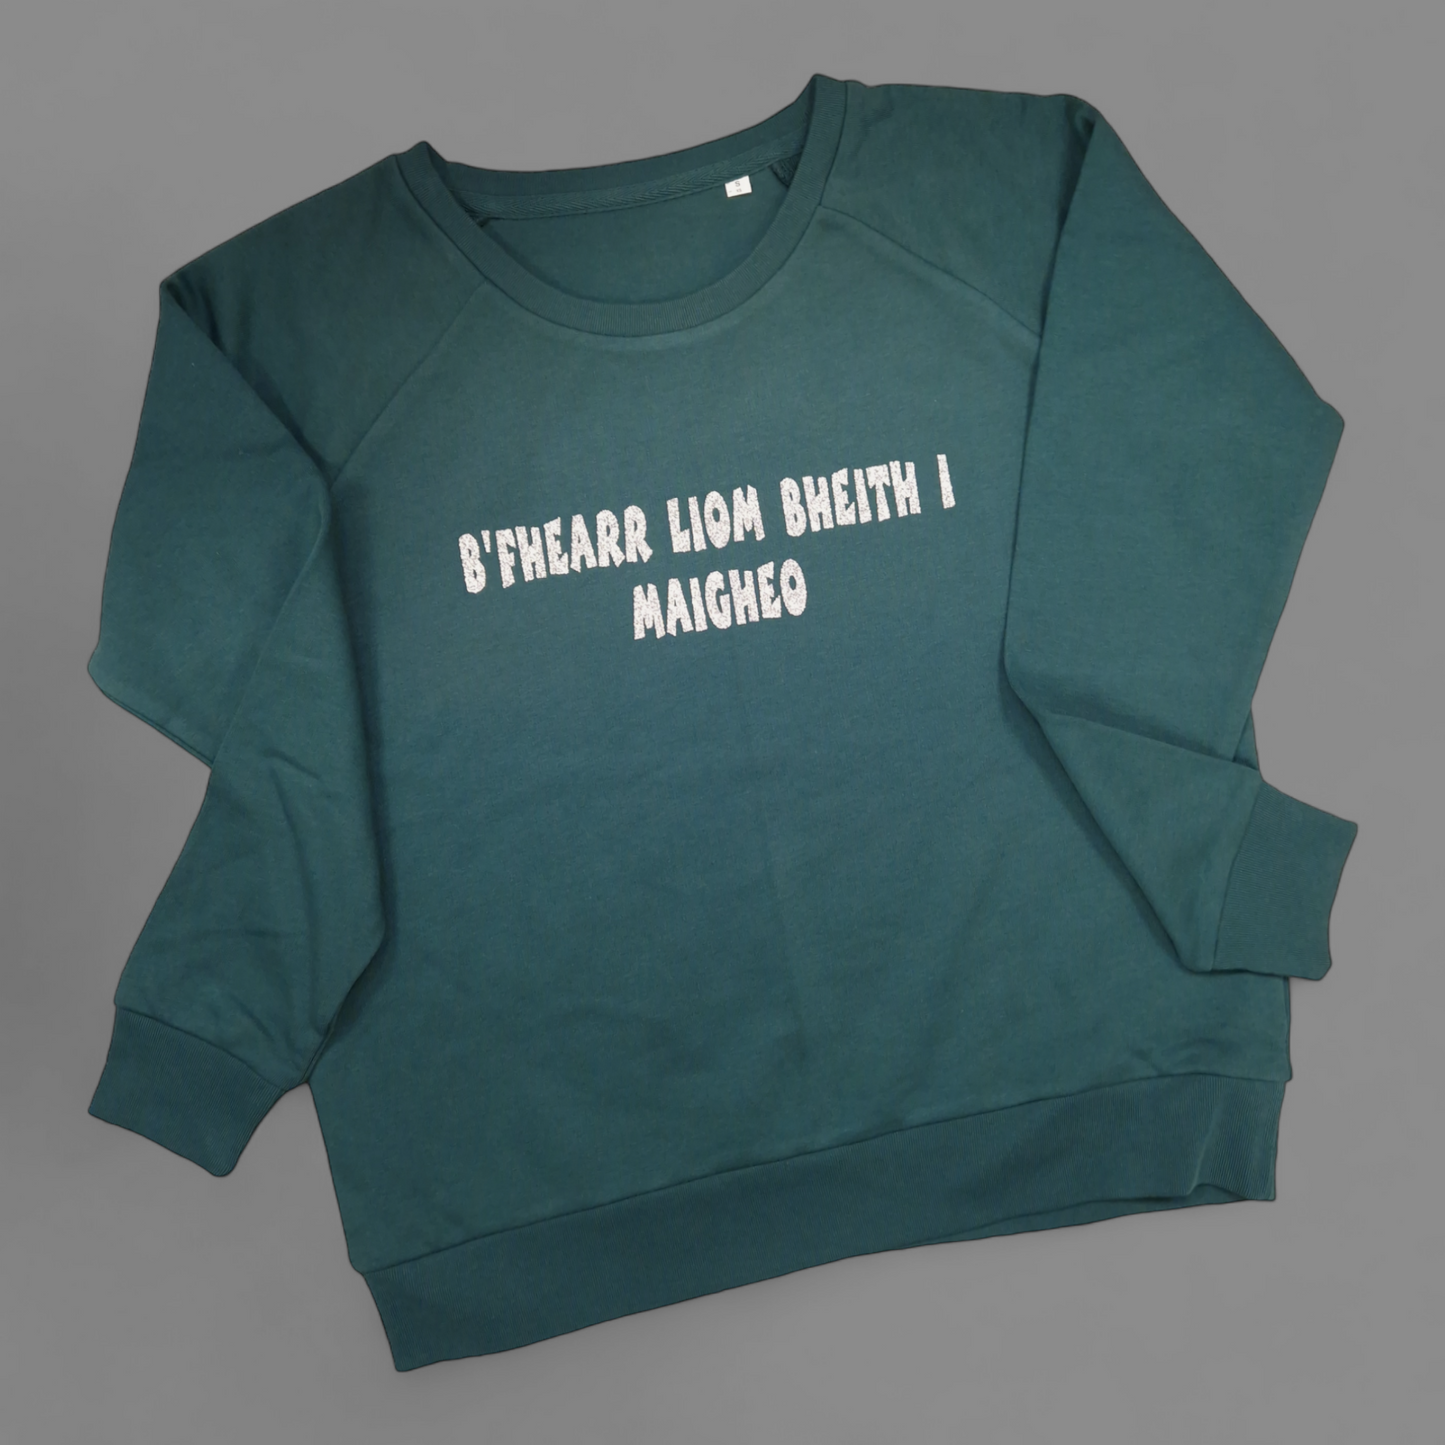 Sweatshirt - Adult S - B'Fhearr liom bheith i Maigheo - Glazed Green